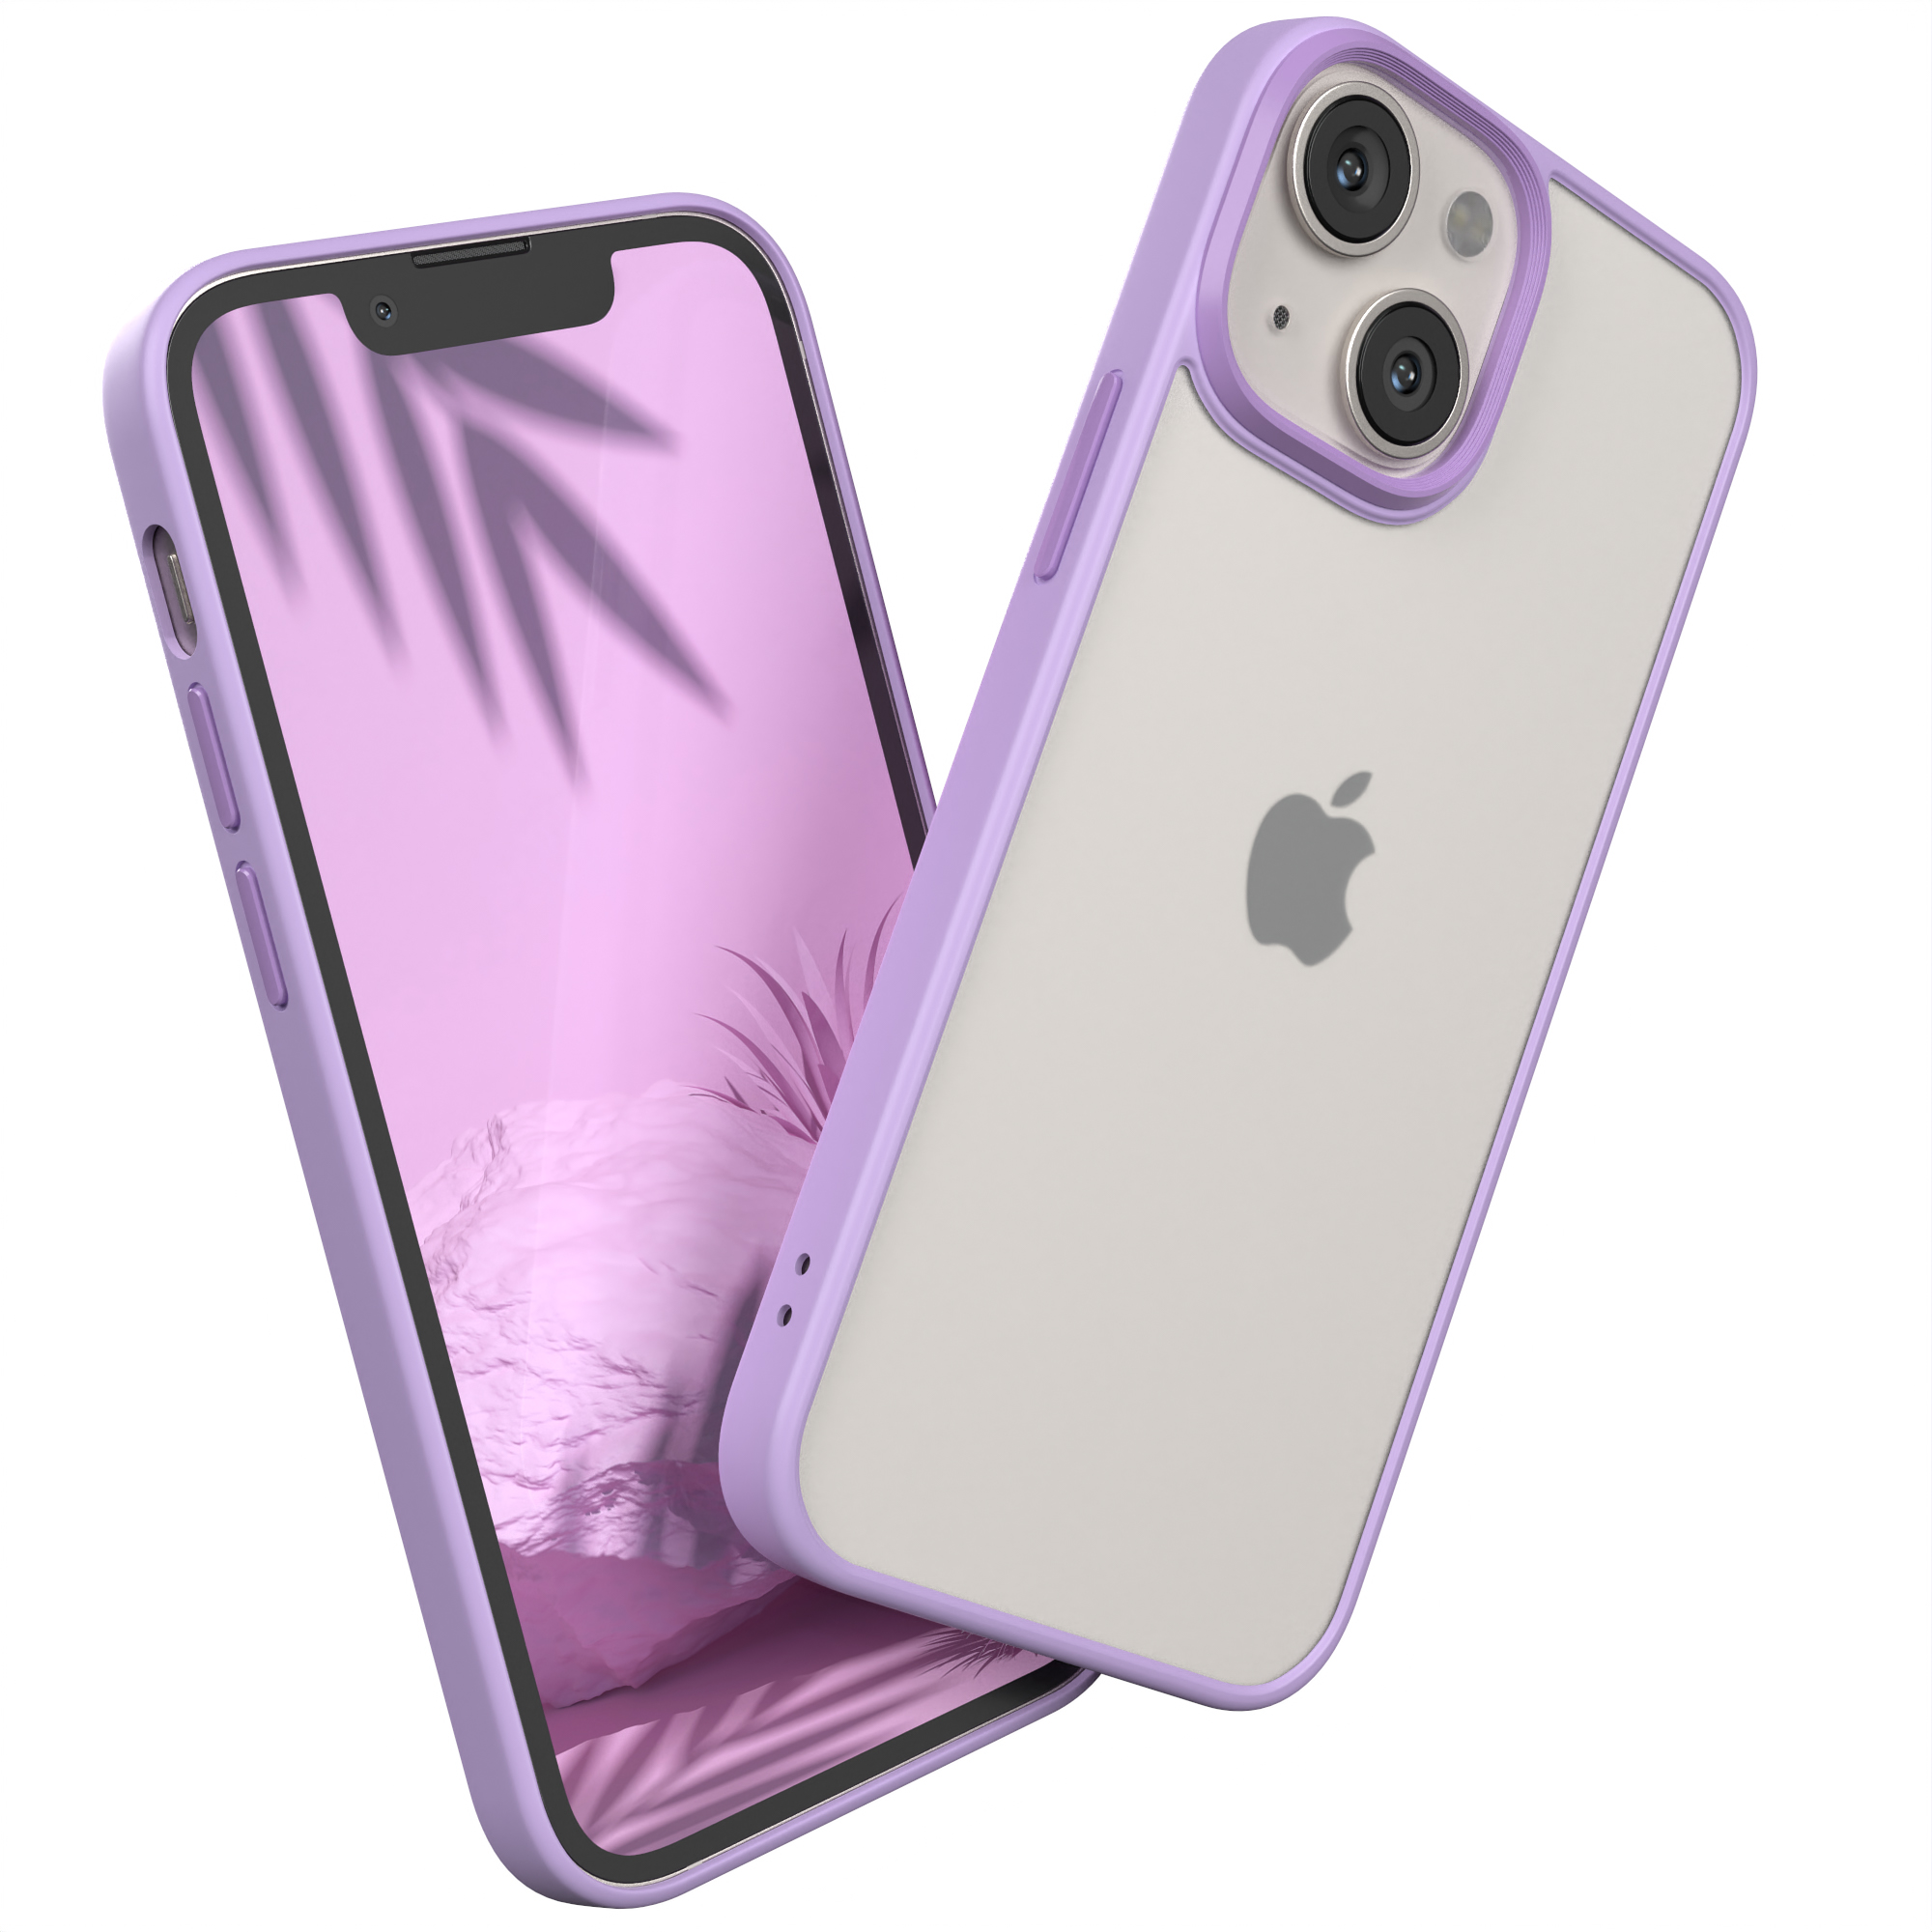 iPhone Lila Case Lavendel Apple, 13 Outdoor Mini, Backcover, EAZY CASE Matt,